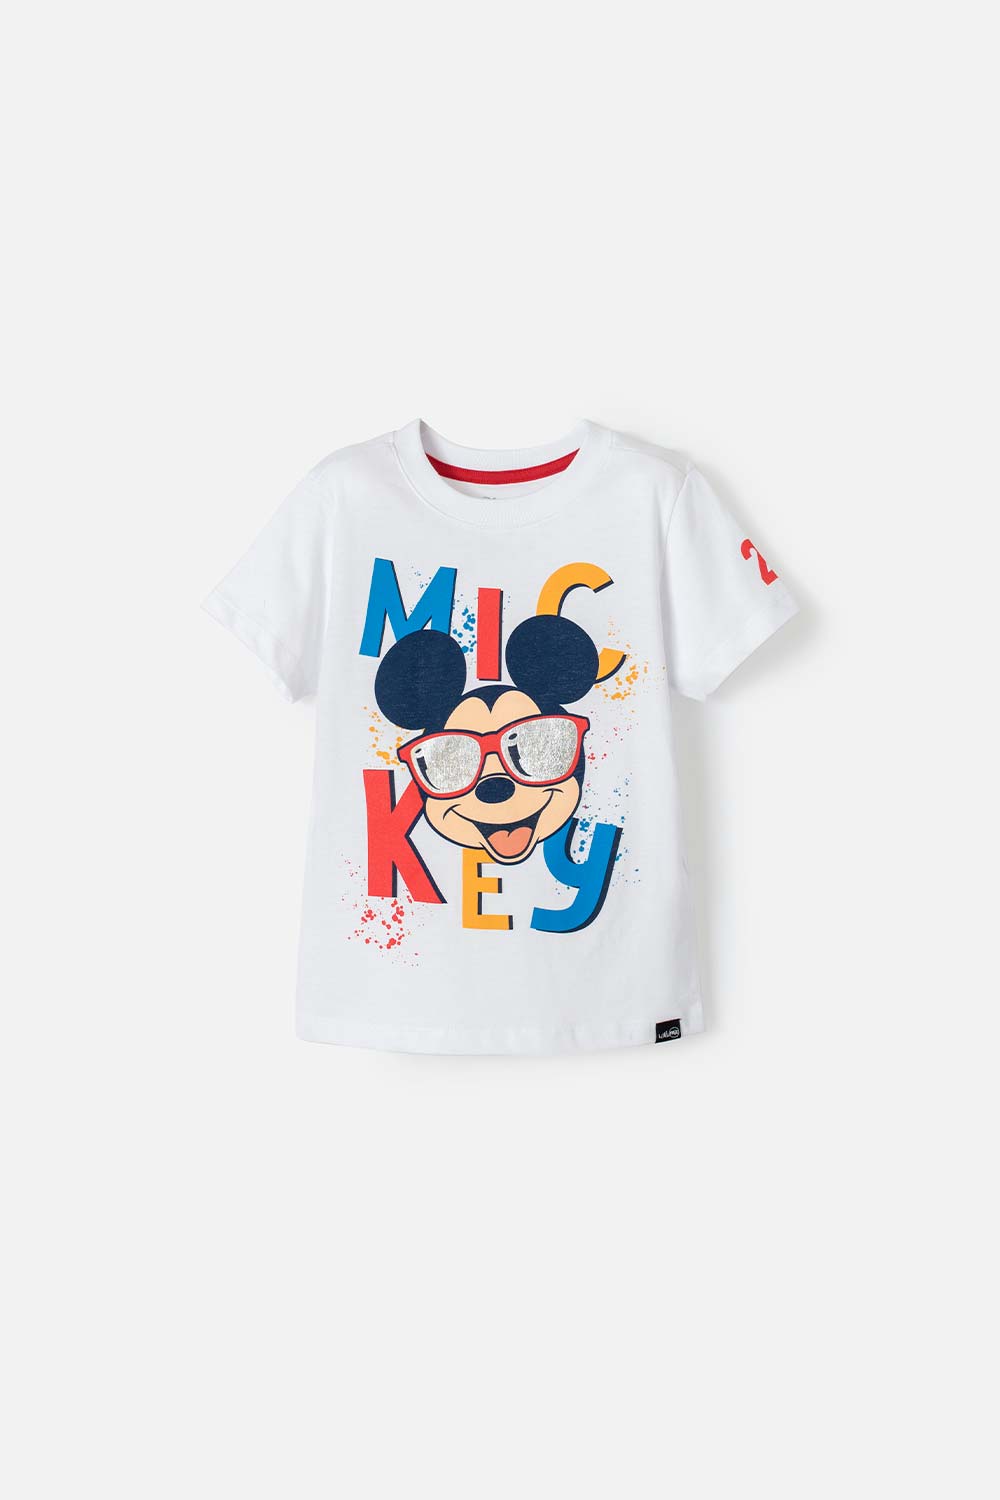 Camiseta de Mickey  manga corta blanco para niño 2t a 5t 2T-0